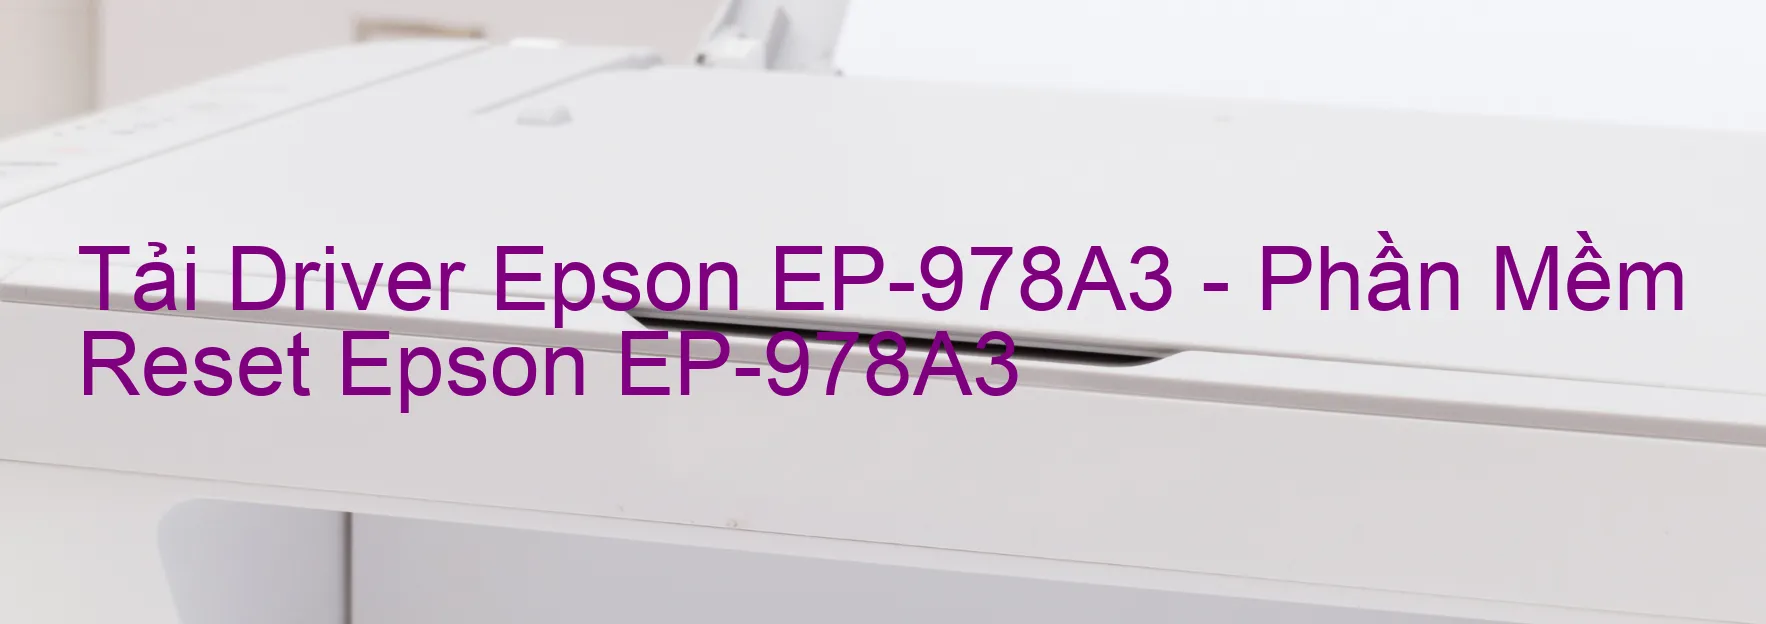 Driver Epson EP-978A3, Phần Mềm Reset Epson EP-978A3